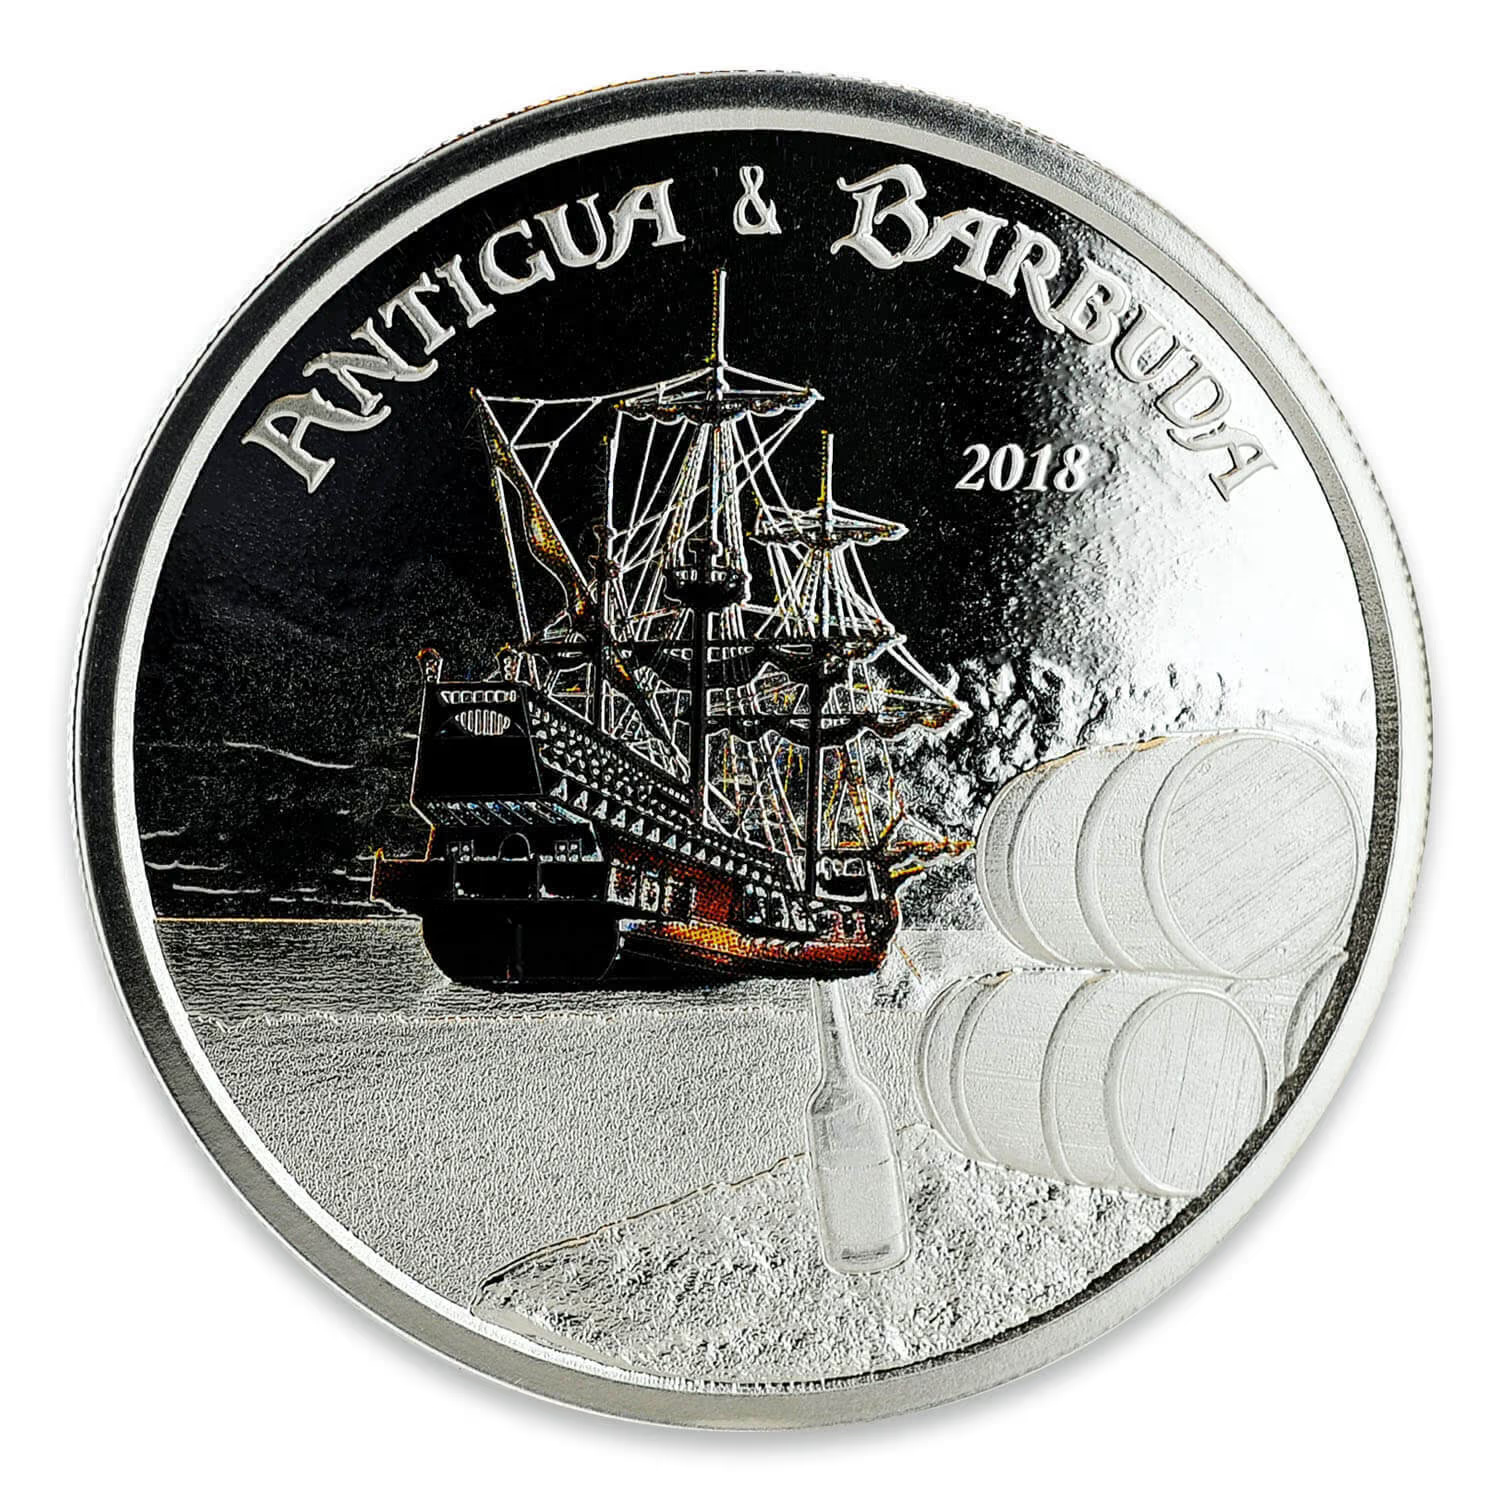 1 Oz Silver Coin 2018 EC8 Antigua & Barbuda $2 Scottsdale Color Proof Rum Runner-classypw.com-1